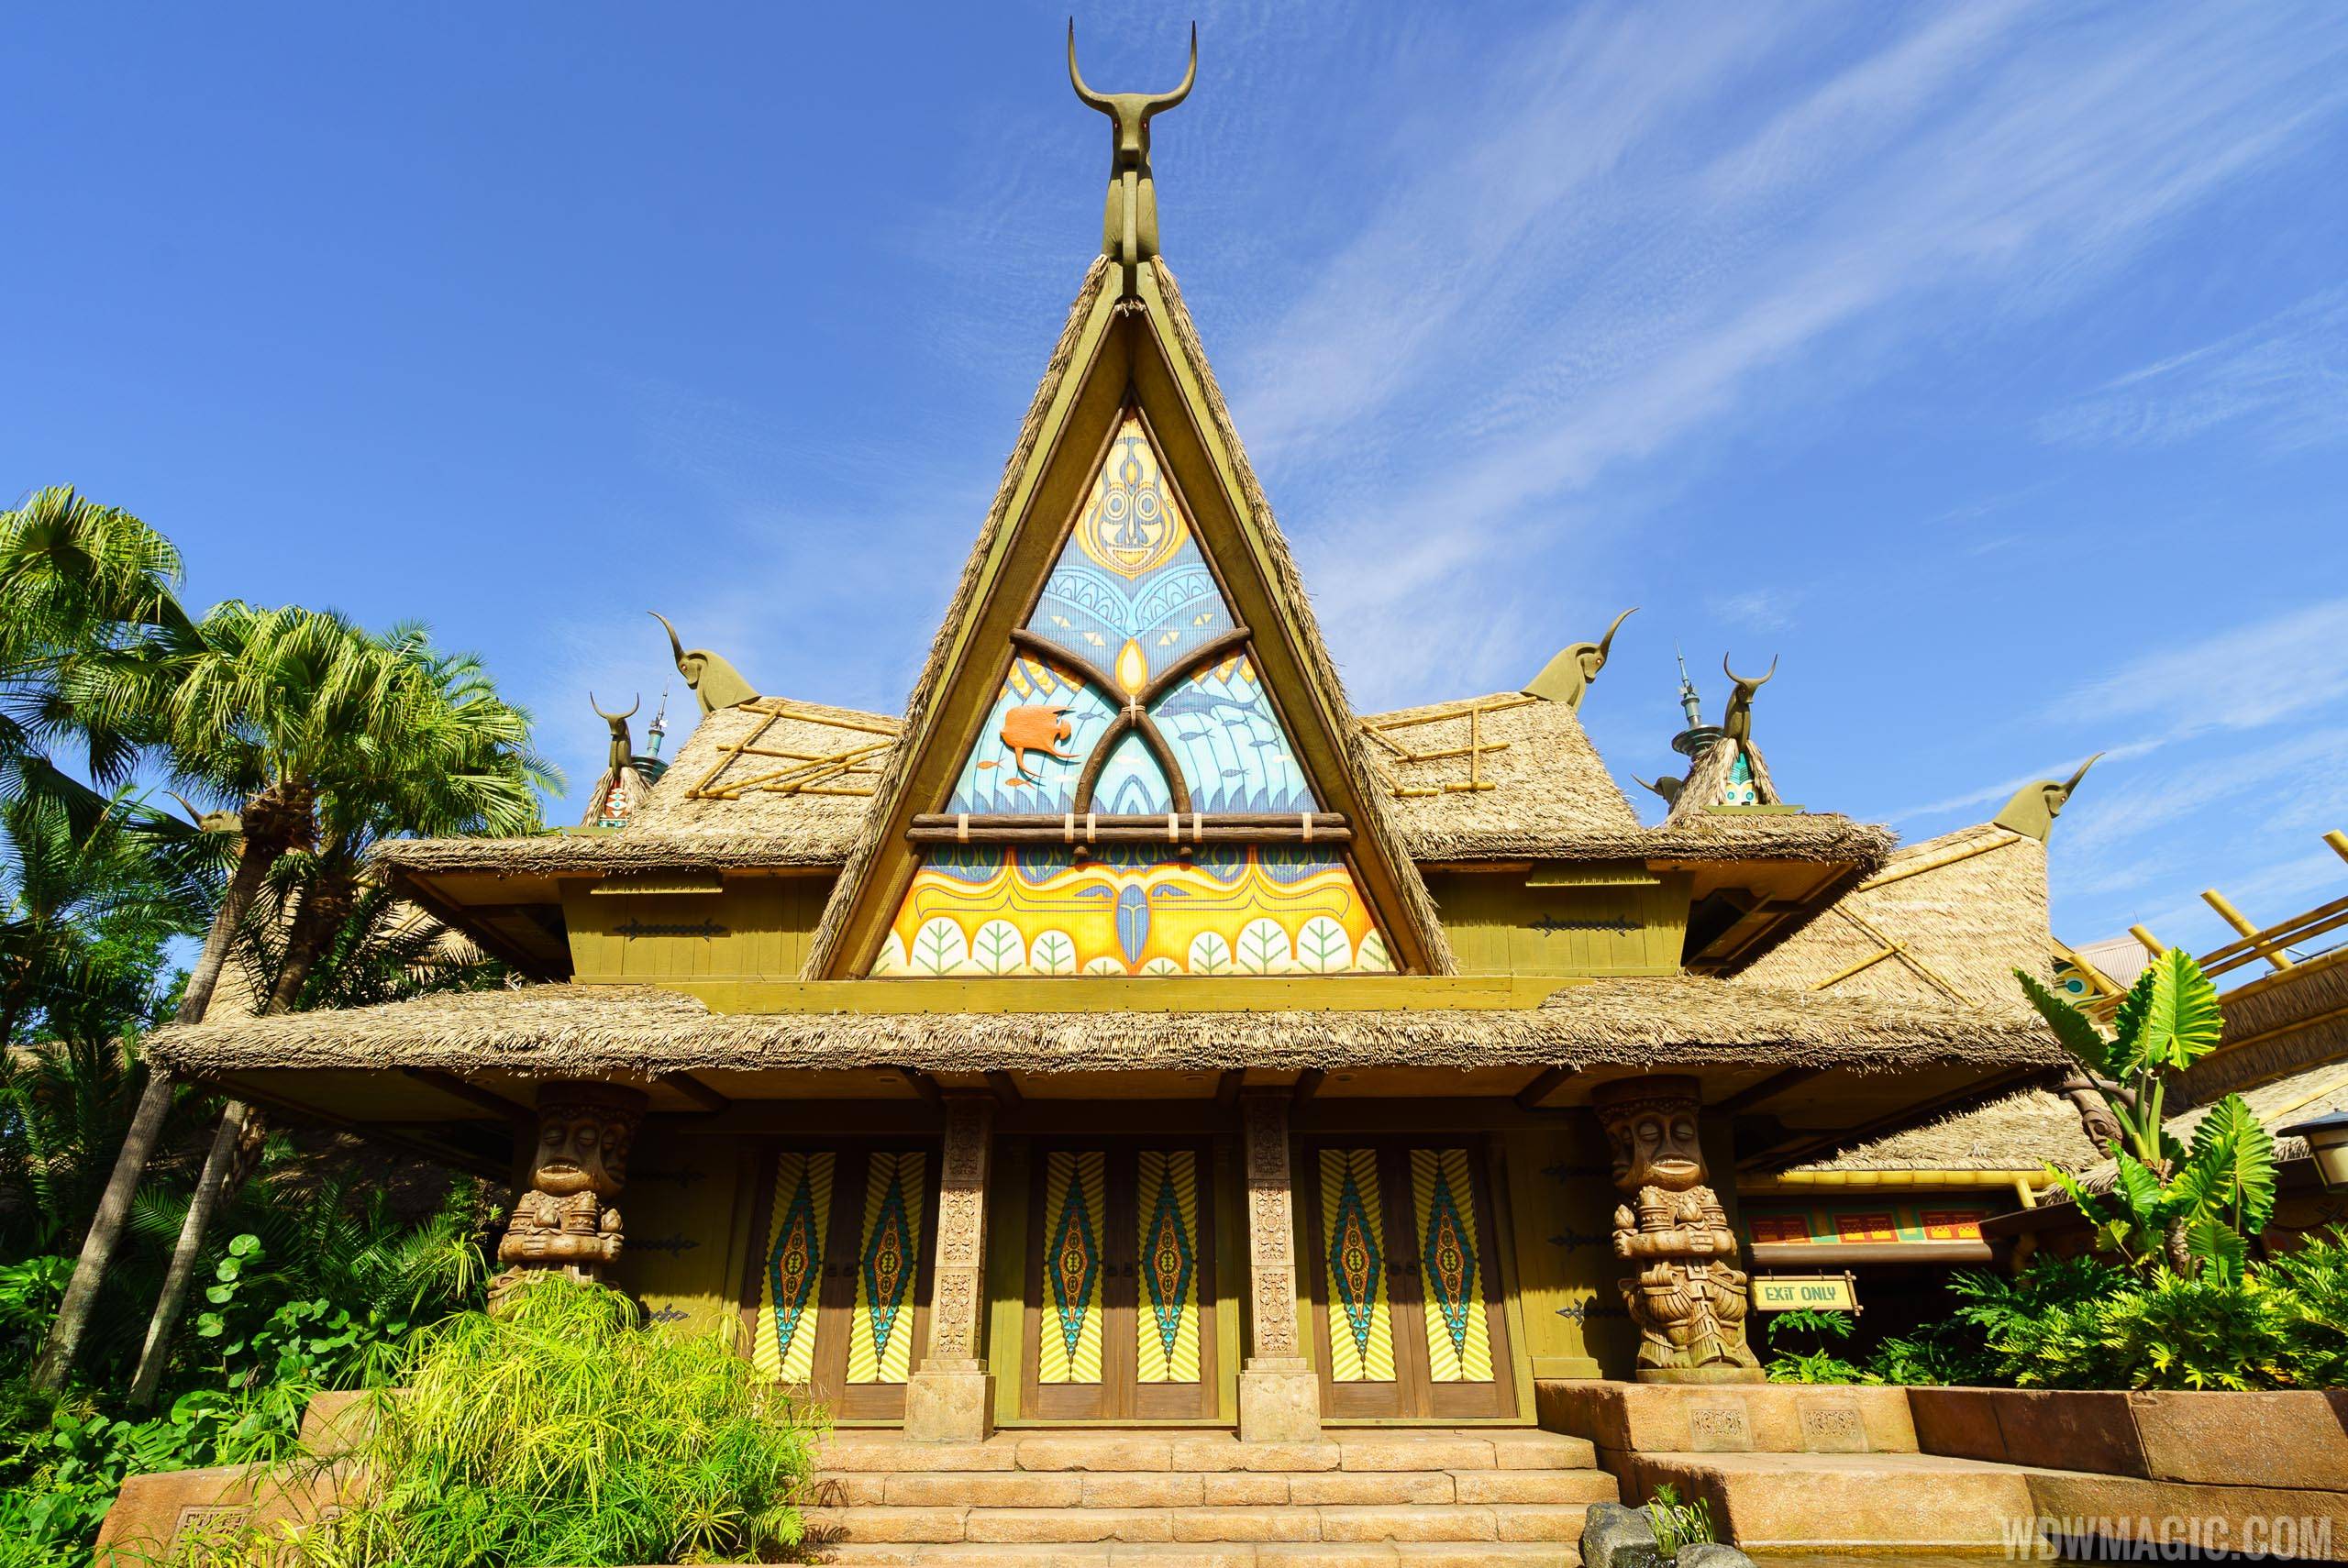 Walt Disney's Enchanted Tiki Room overview